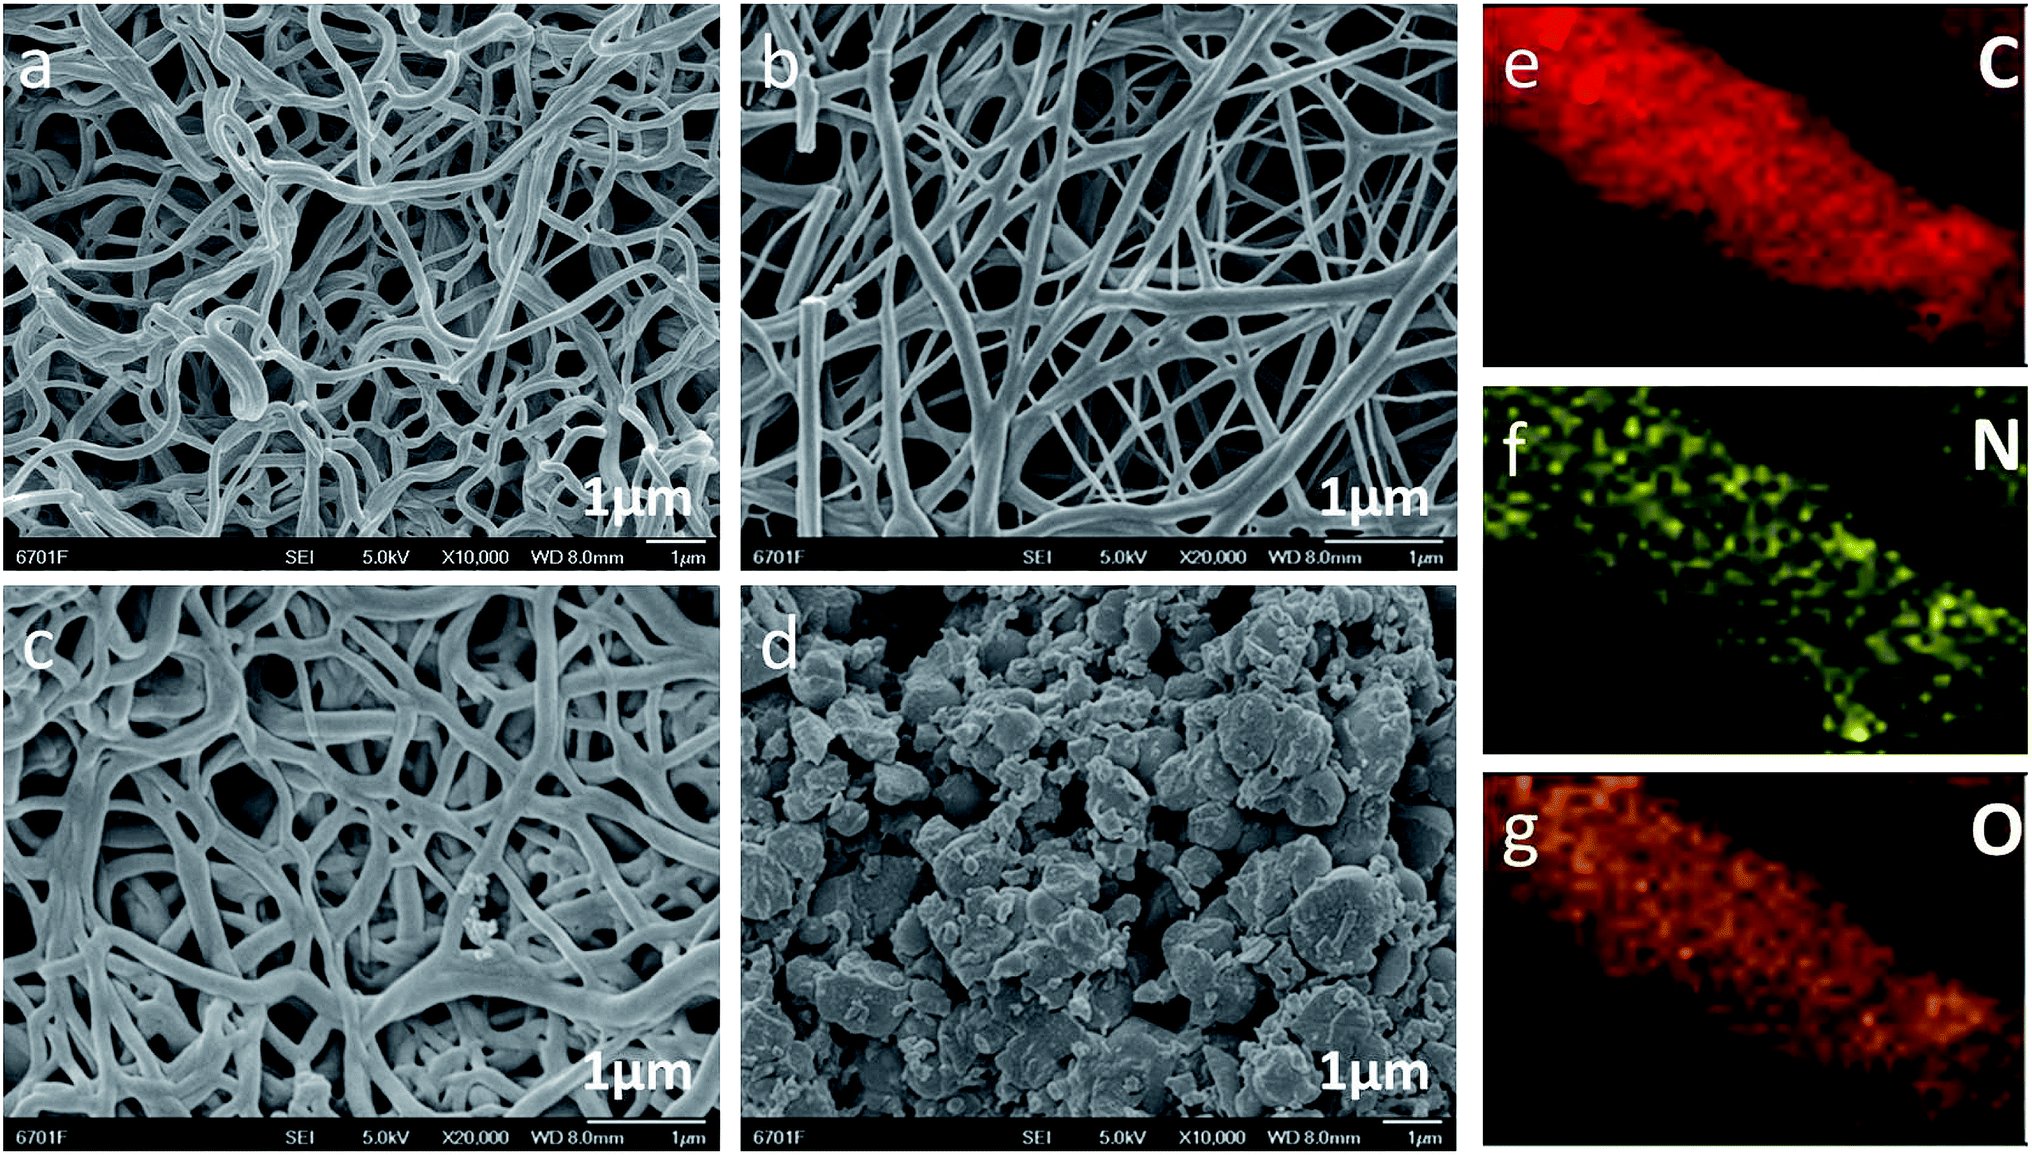 The Preparation Of Liquefied Bio Stalk Carbon Nanofibers And Their Application In Supercapacitors Rsc Advances Rsc Publishing Doi 10 1039 C9rak